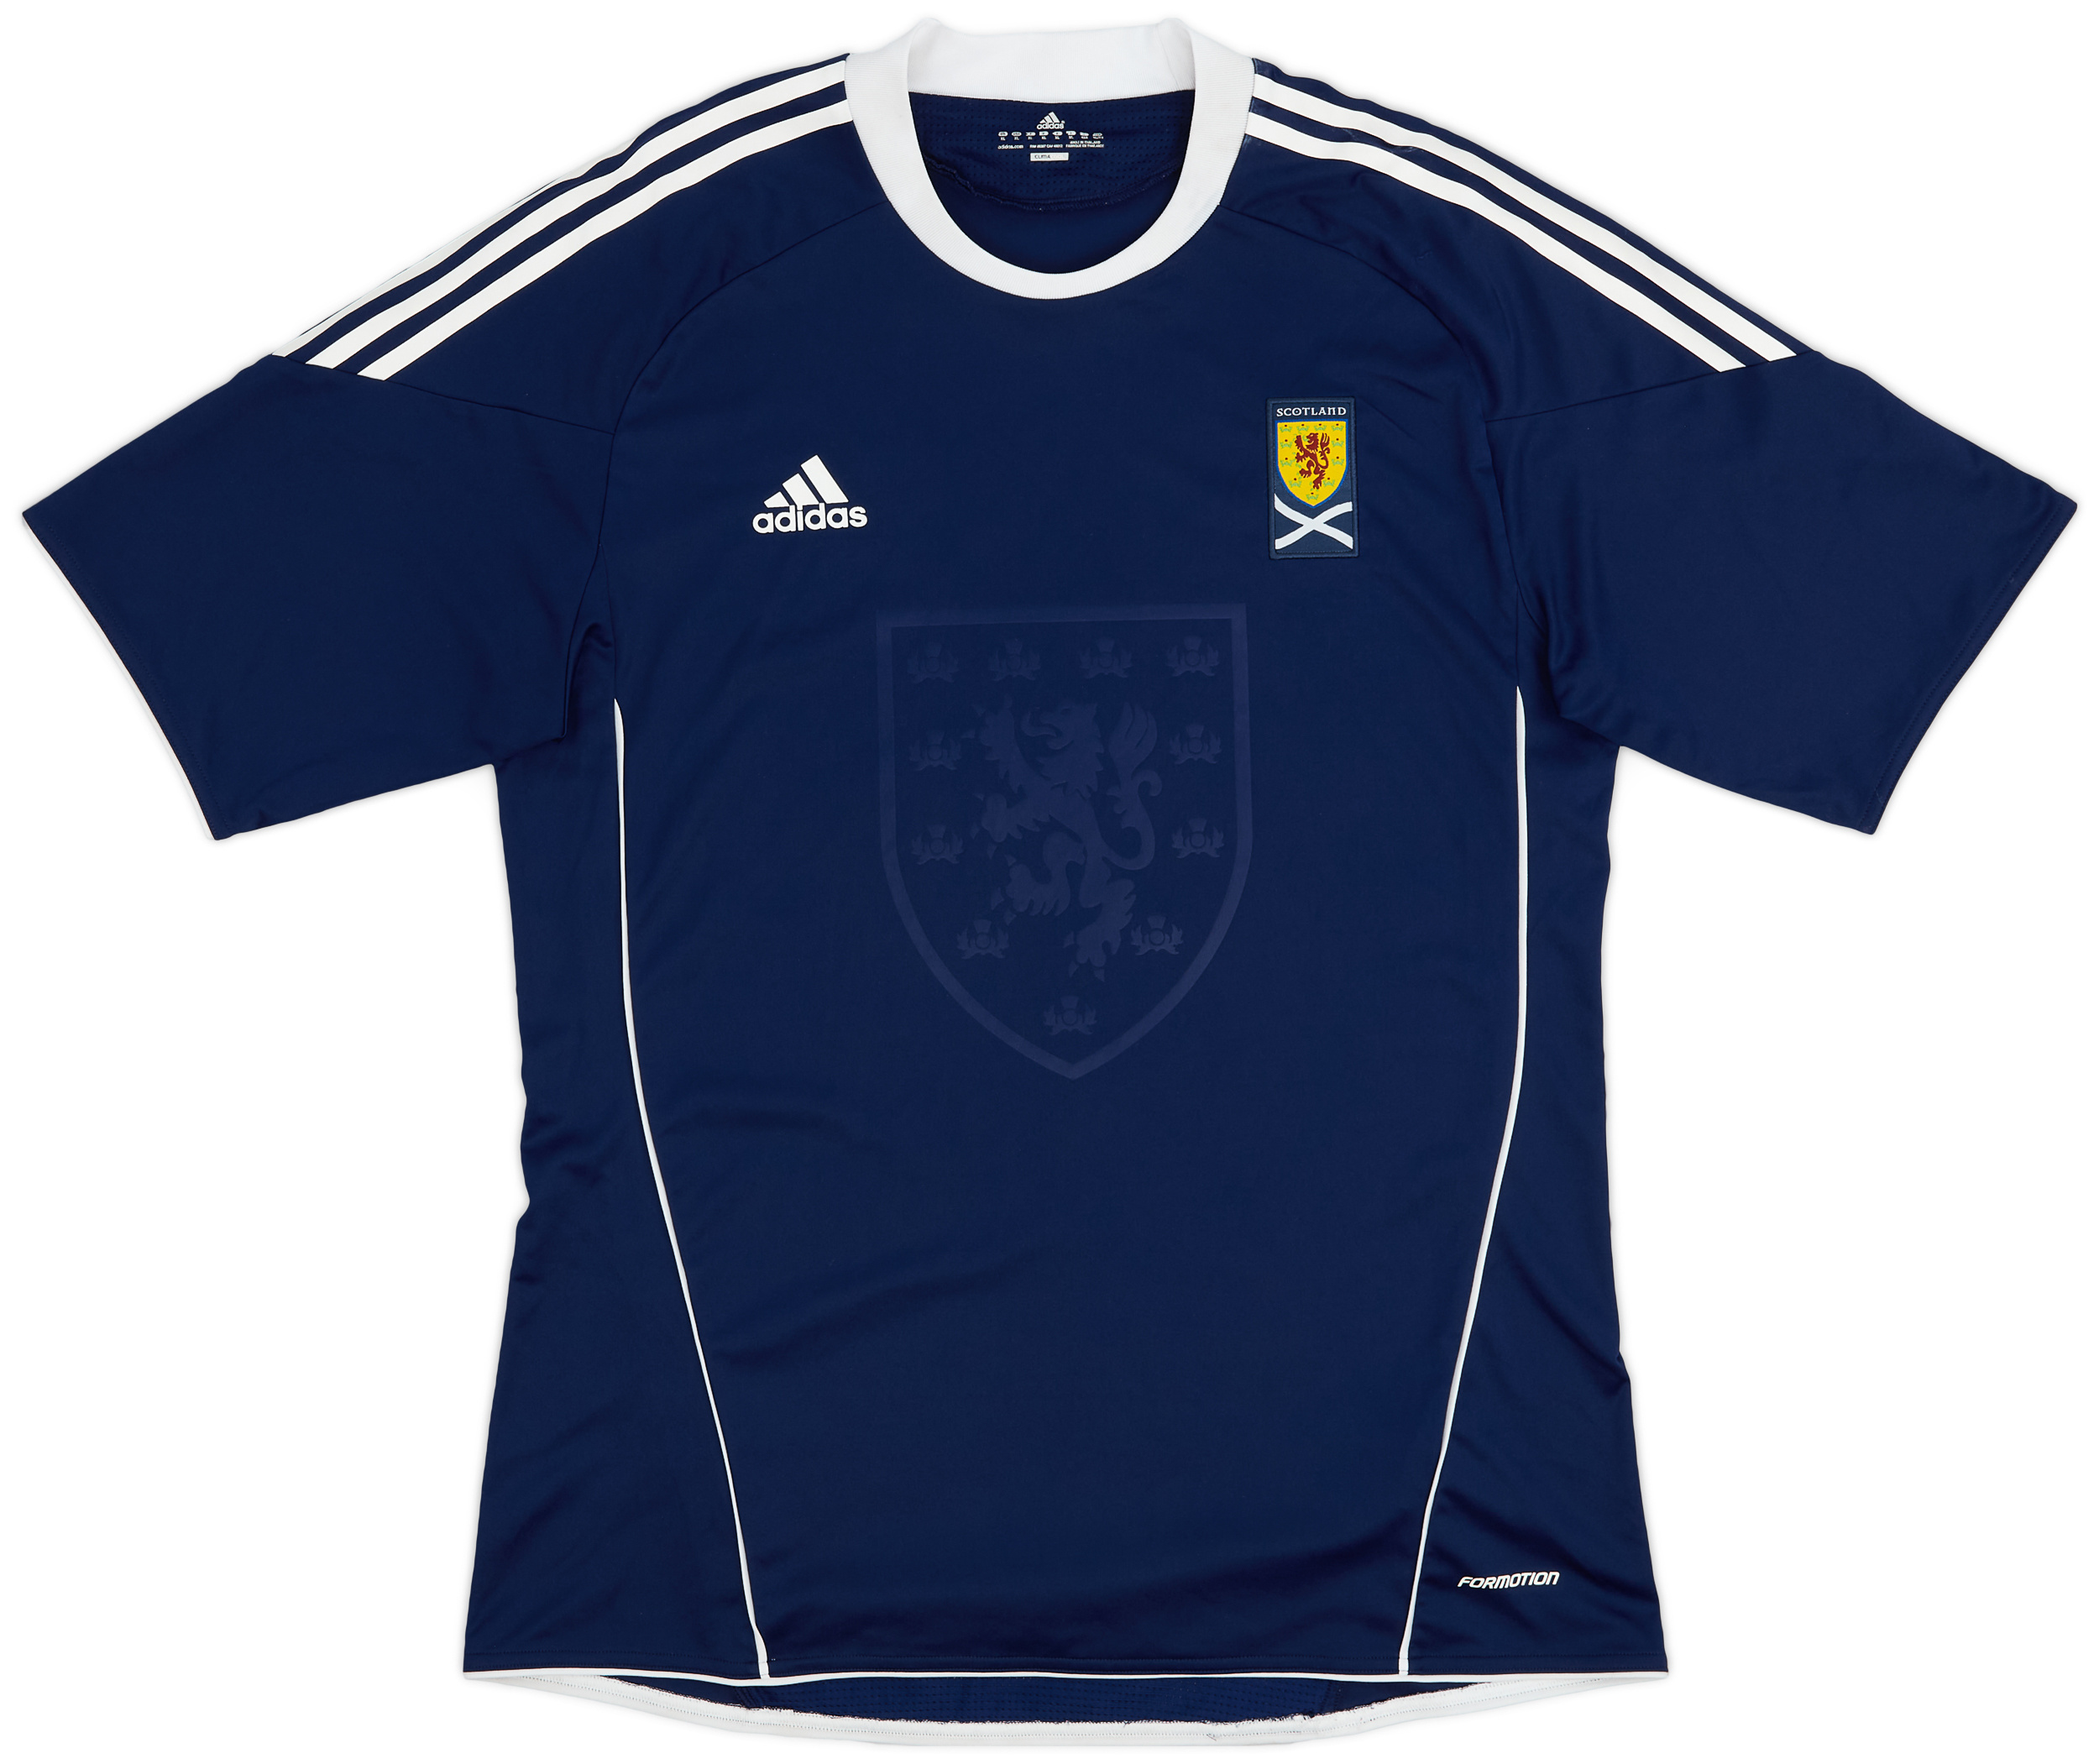 2010-11 Scotland Player Issue Home Shirt - 8/10 - ()